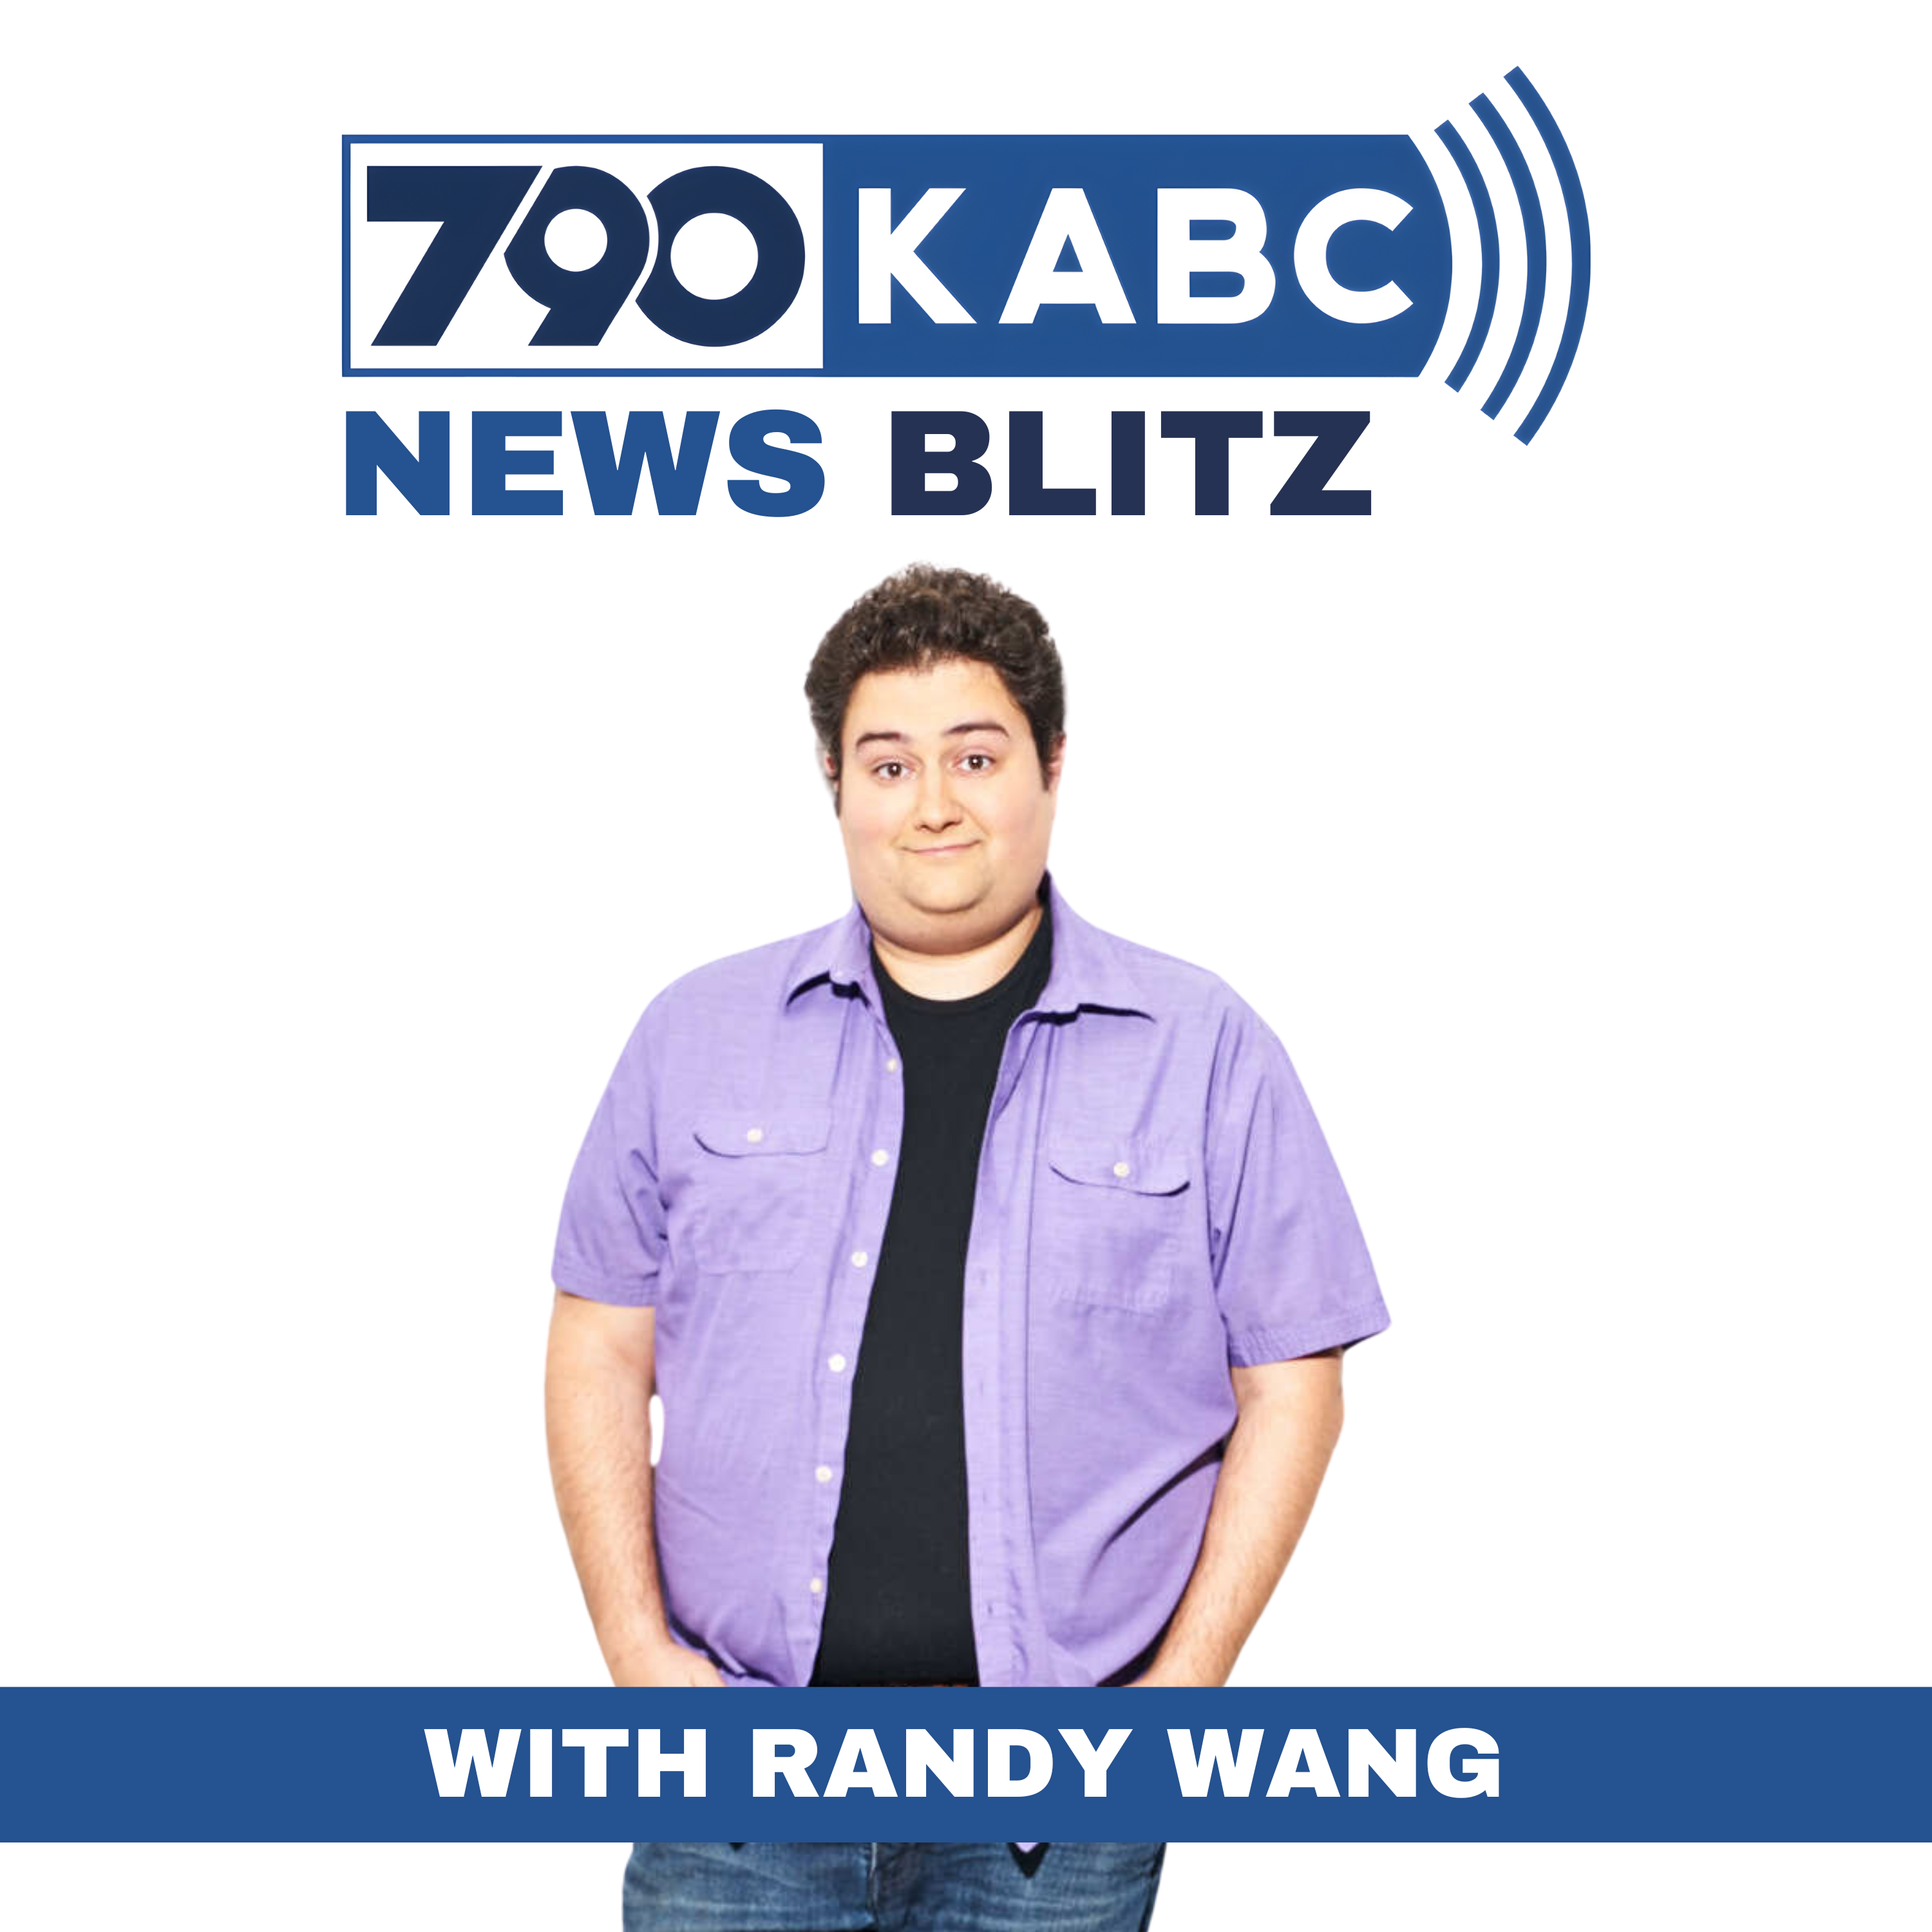 The KABC News Blitz